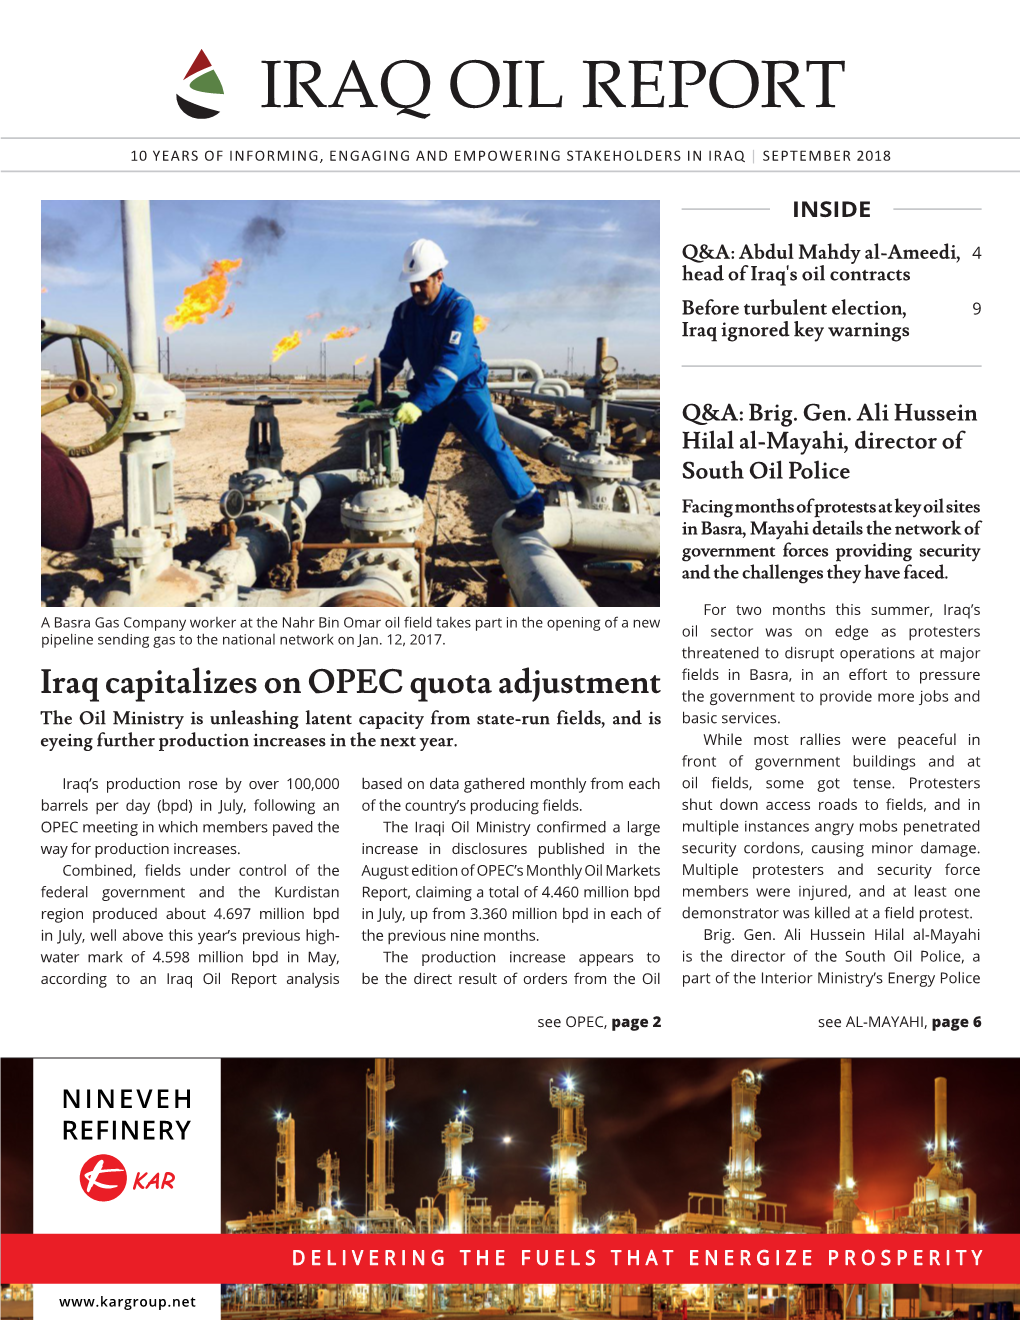 Iraq Capitalizes on OPEC Quota Adjustment